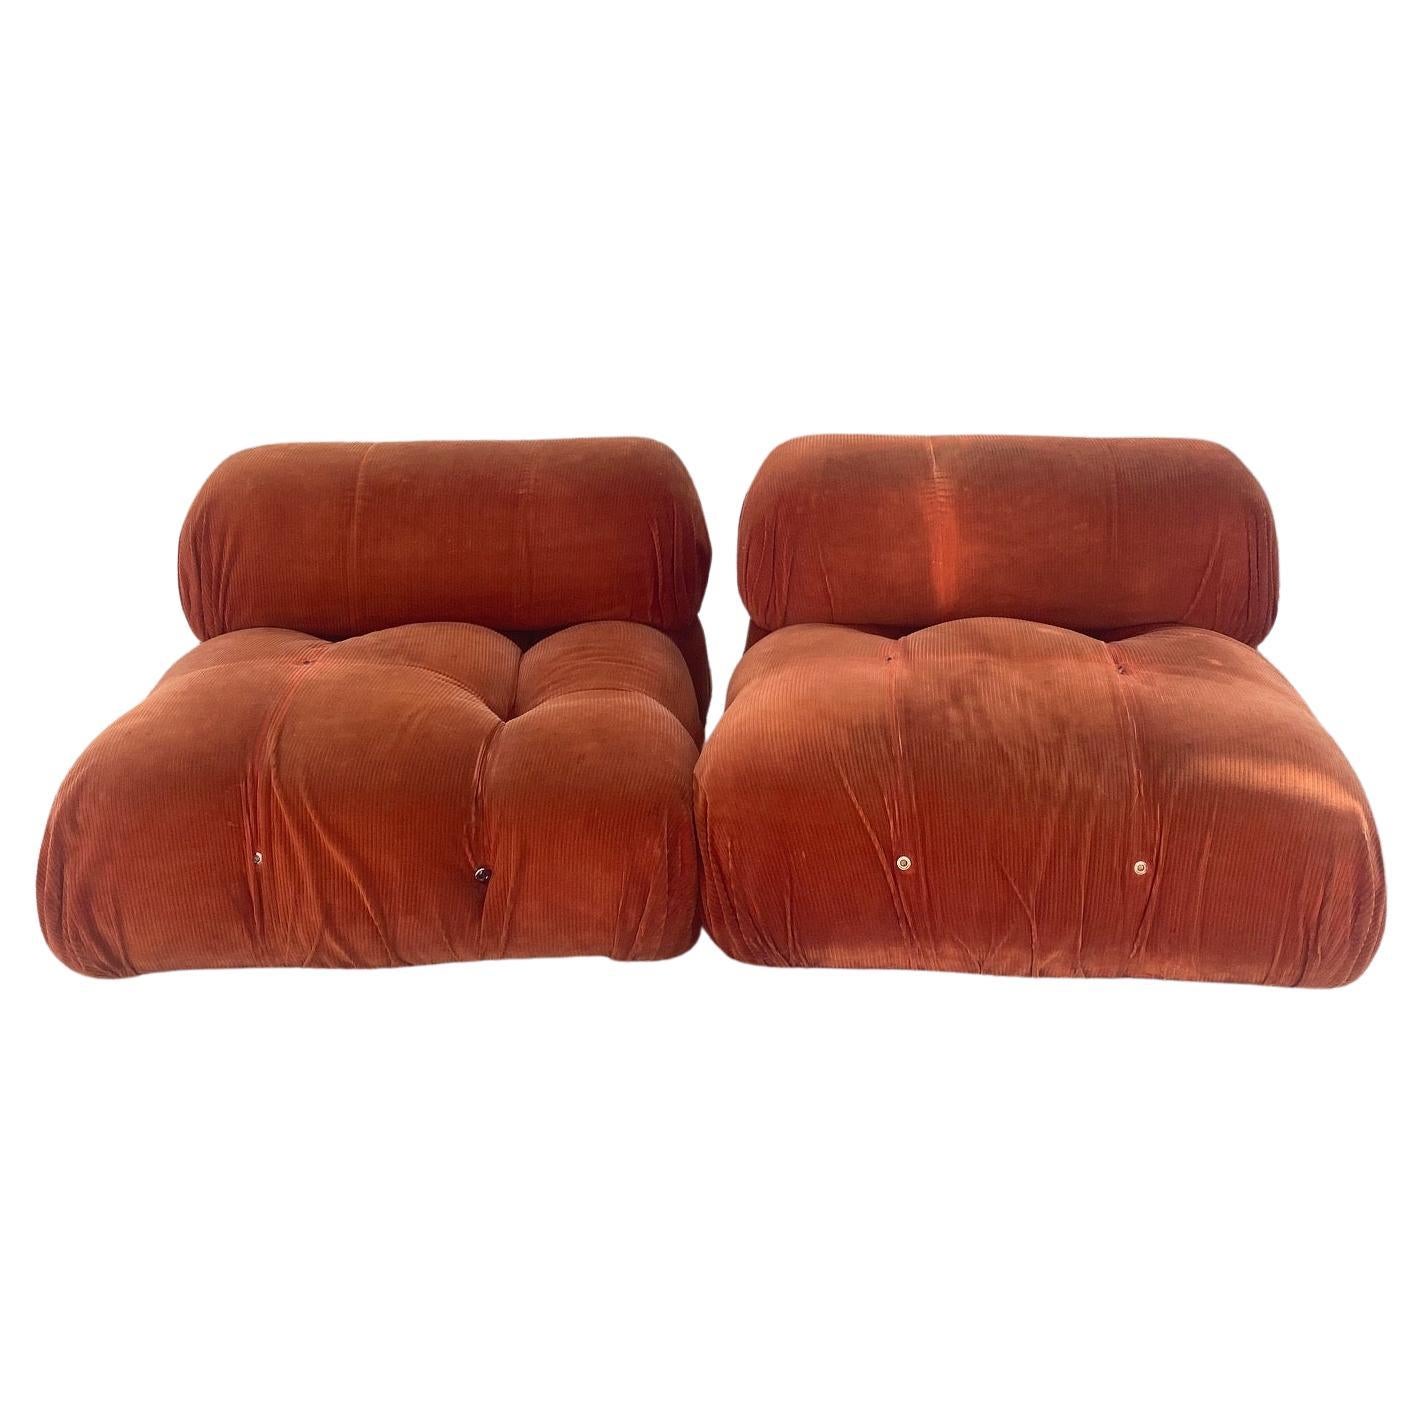 Camaleonda Lounge Chairs by Mario Bellini for B&B, Italia, (Customizable) For Sale